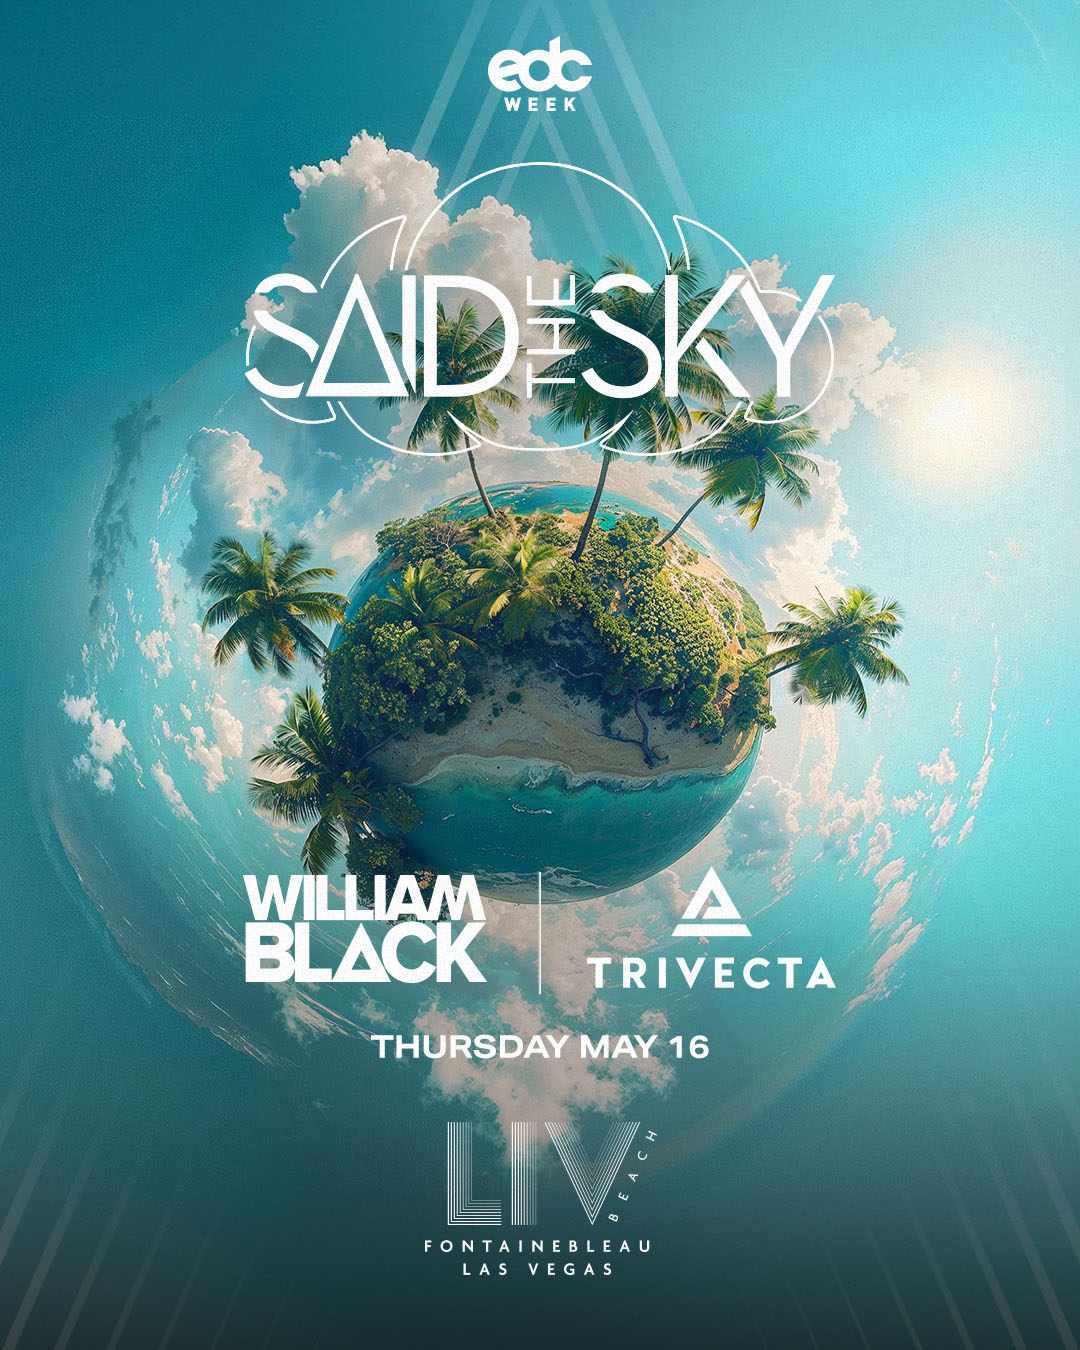 SAID THE SKY | WILLIAM BLACK | TRIVECTA - EDC WEEK